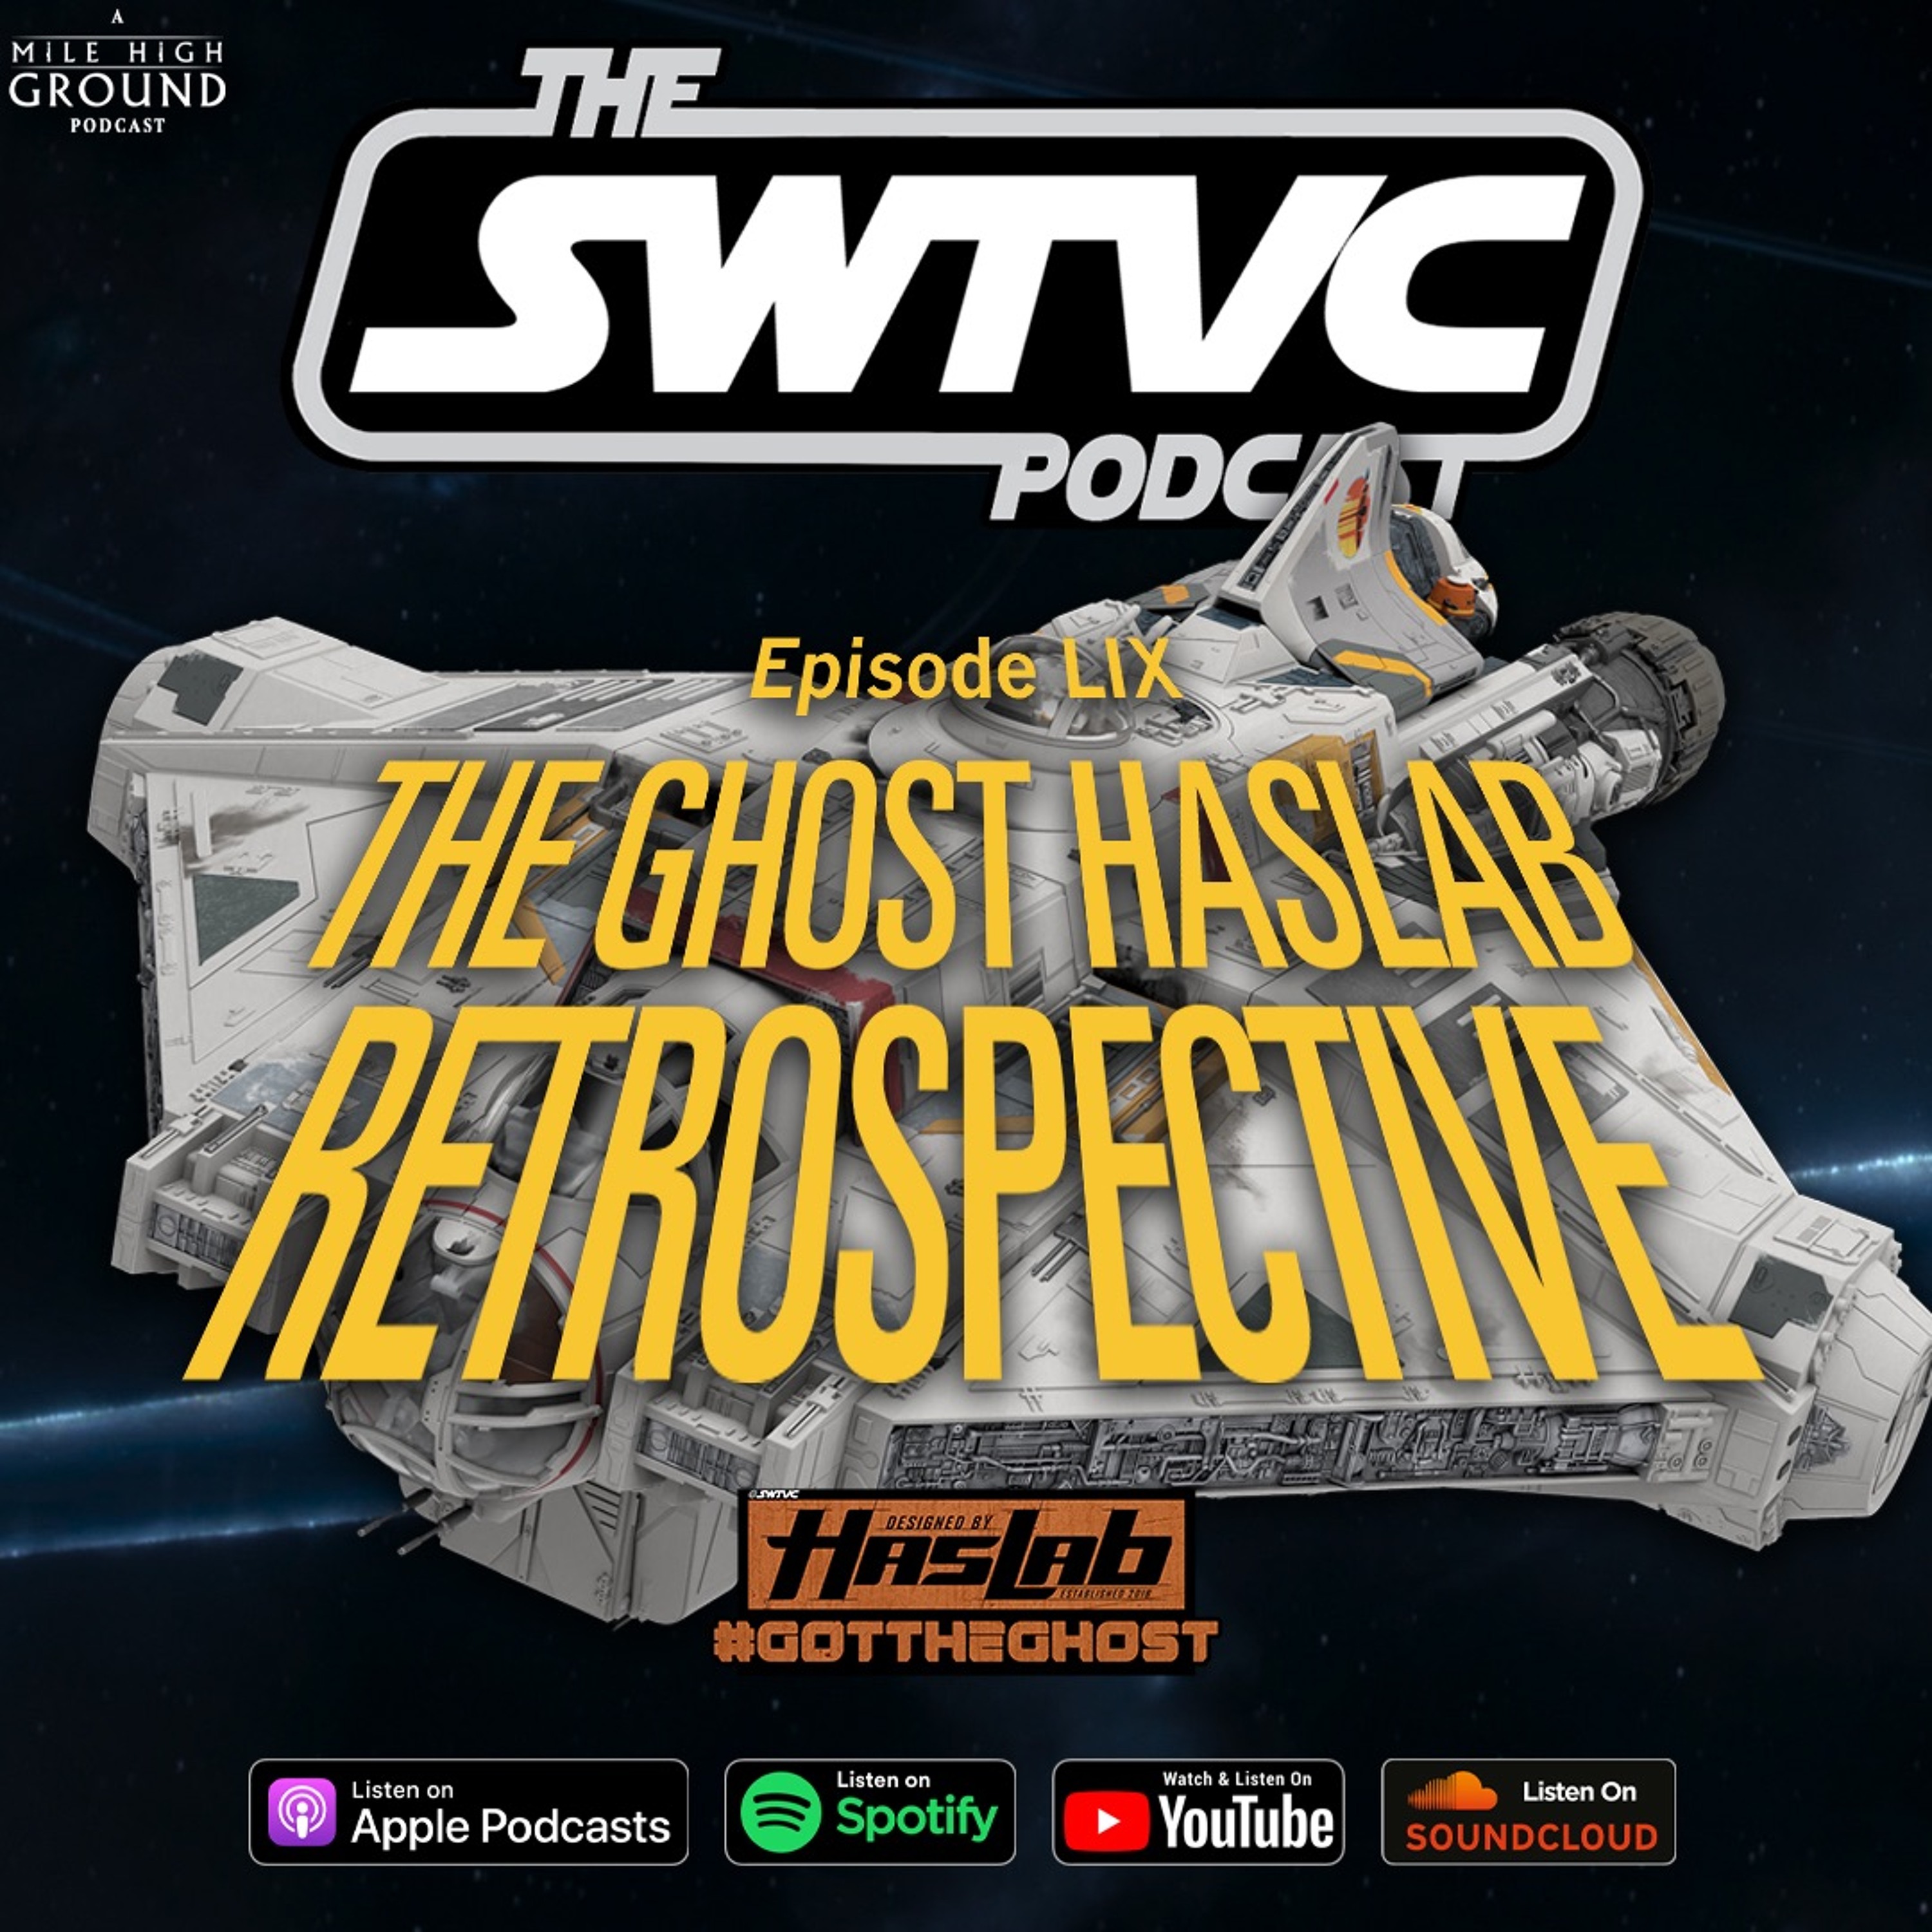 The Ghost HasLab Retrospective